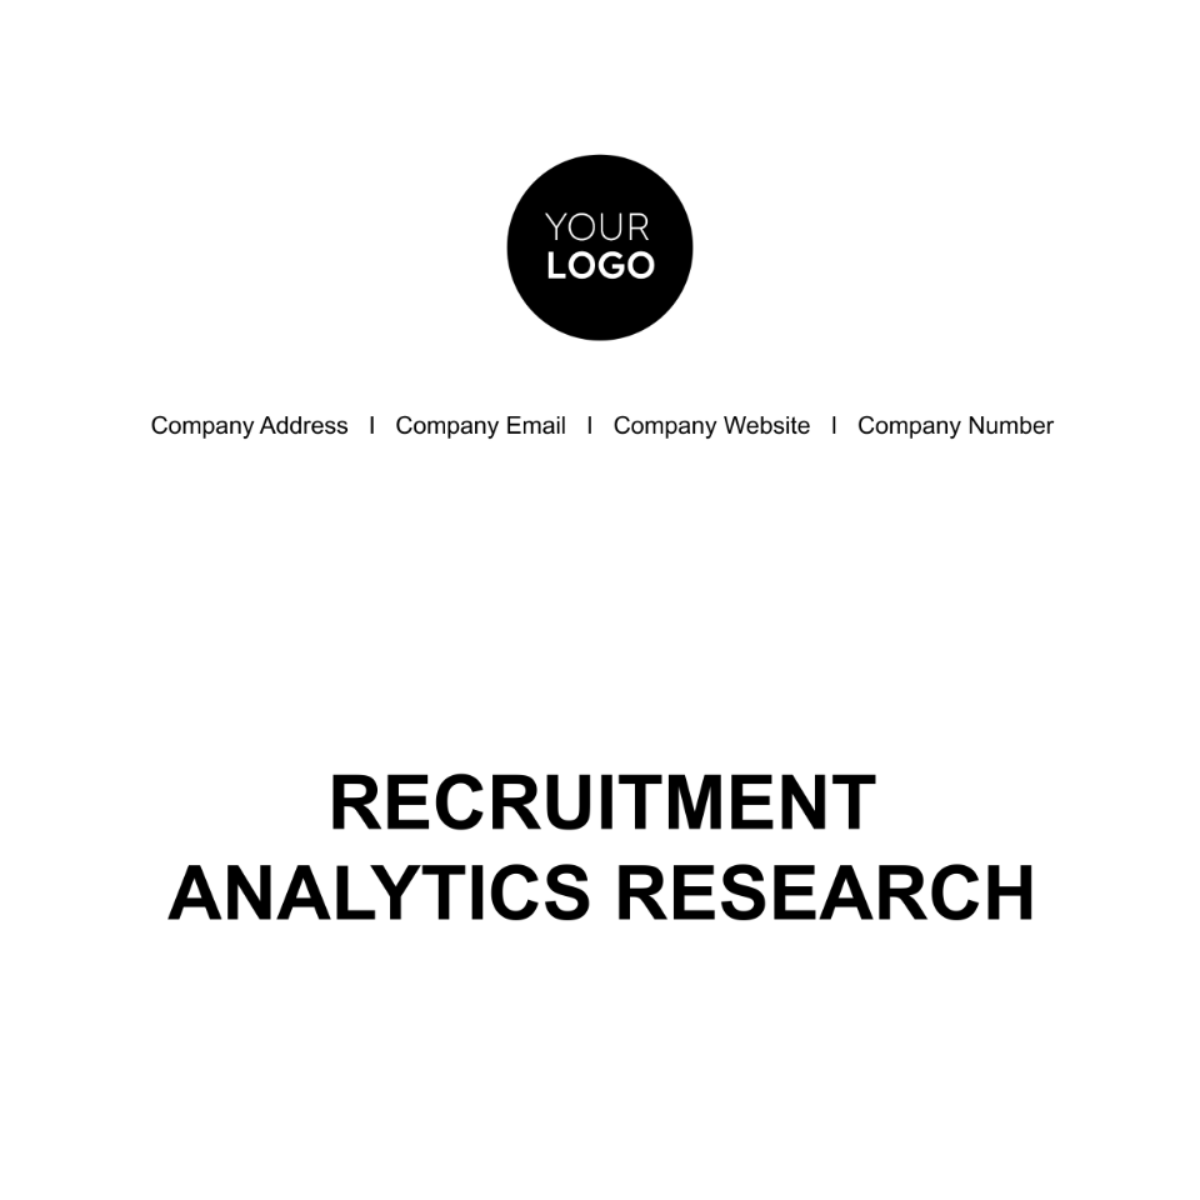 Recruitment Analytics Research HR Template